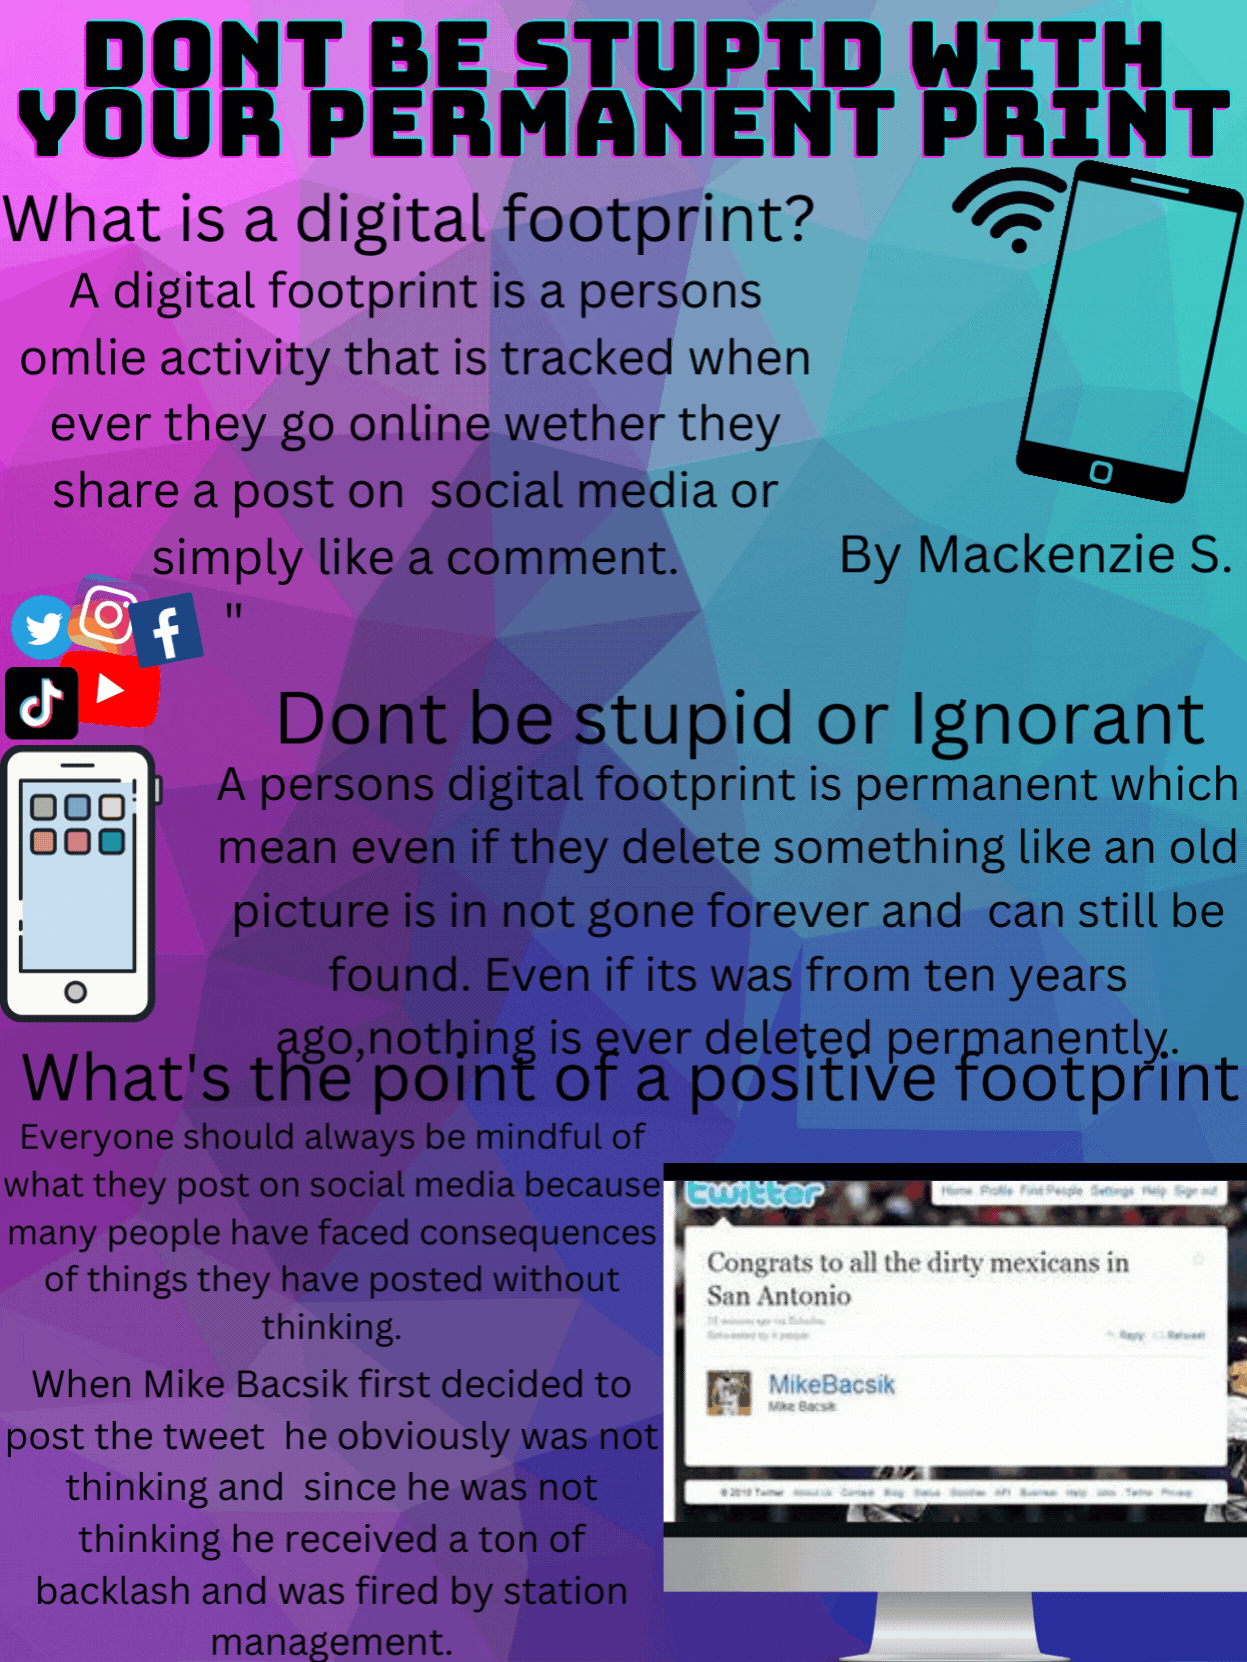 Digital Footprint Poster - Mackenzie S